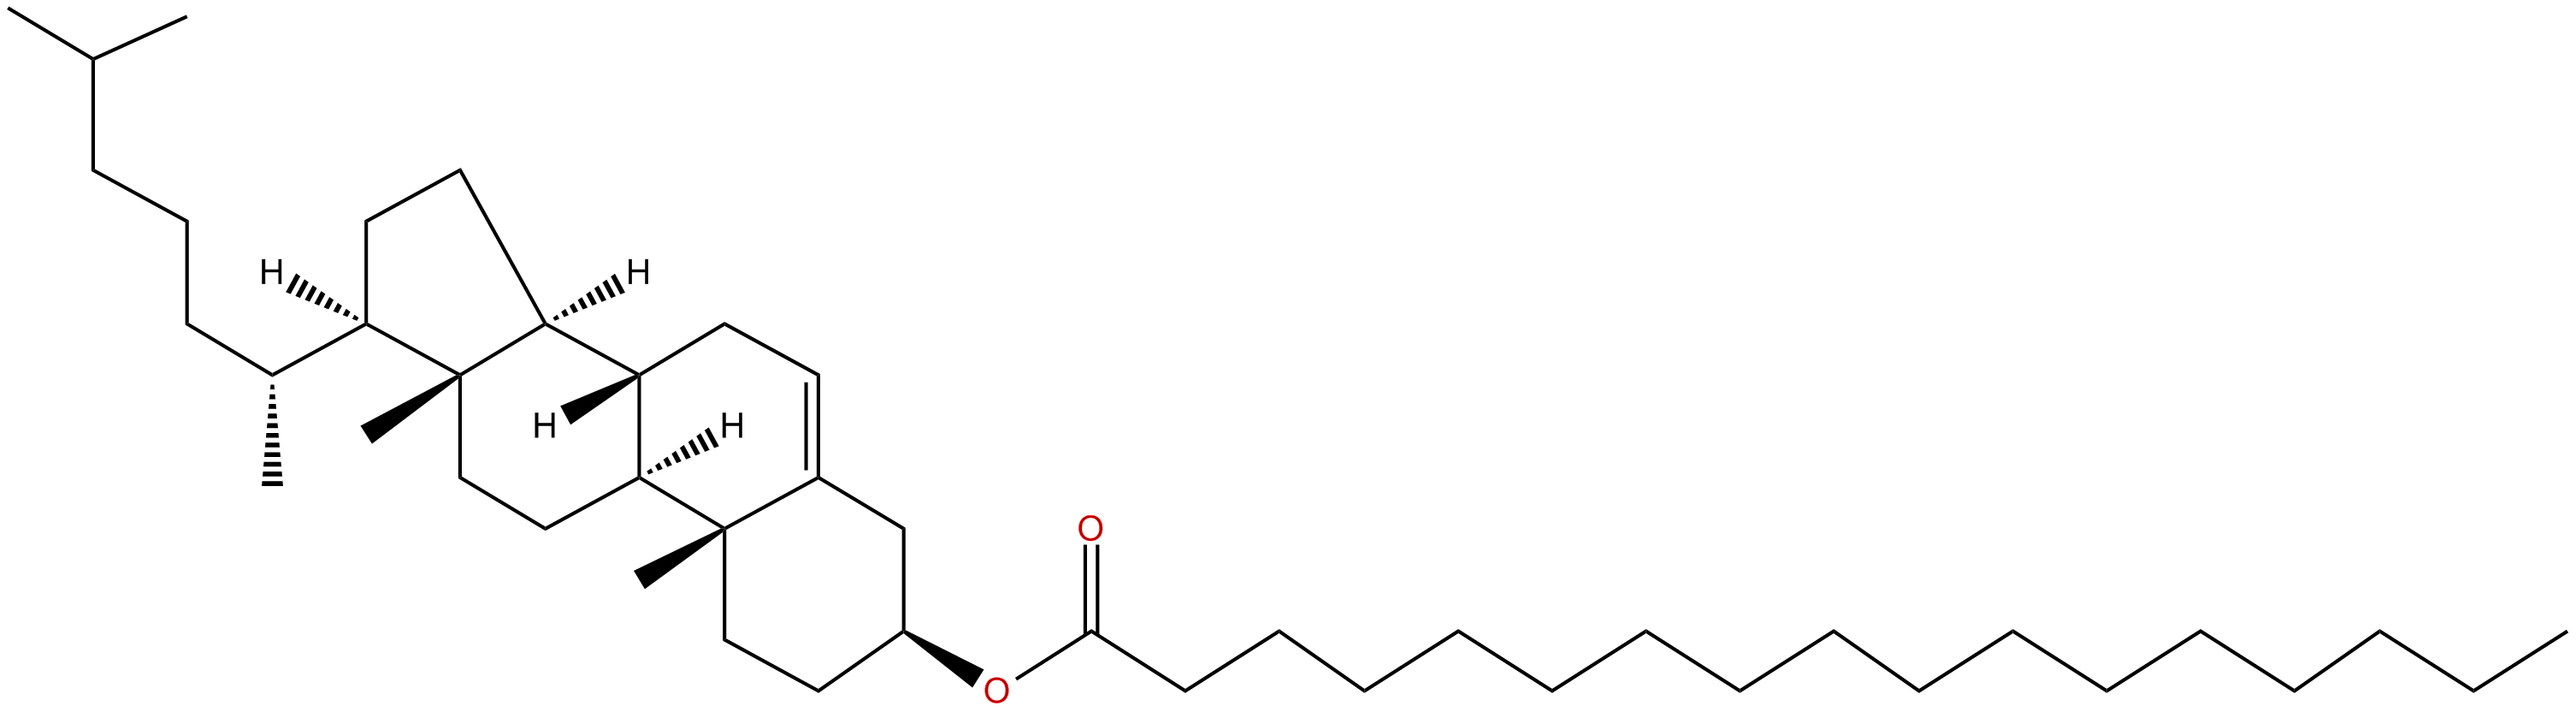 Image of (3.beta.)-cholest-5-en-3-yl heptadecanoate